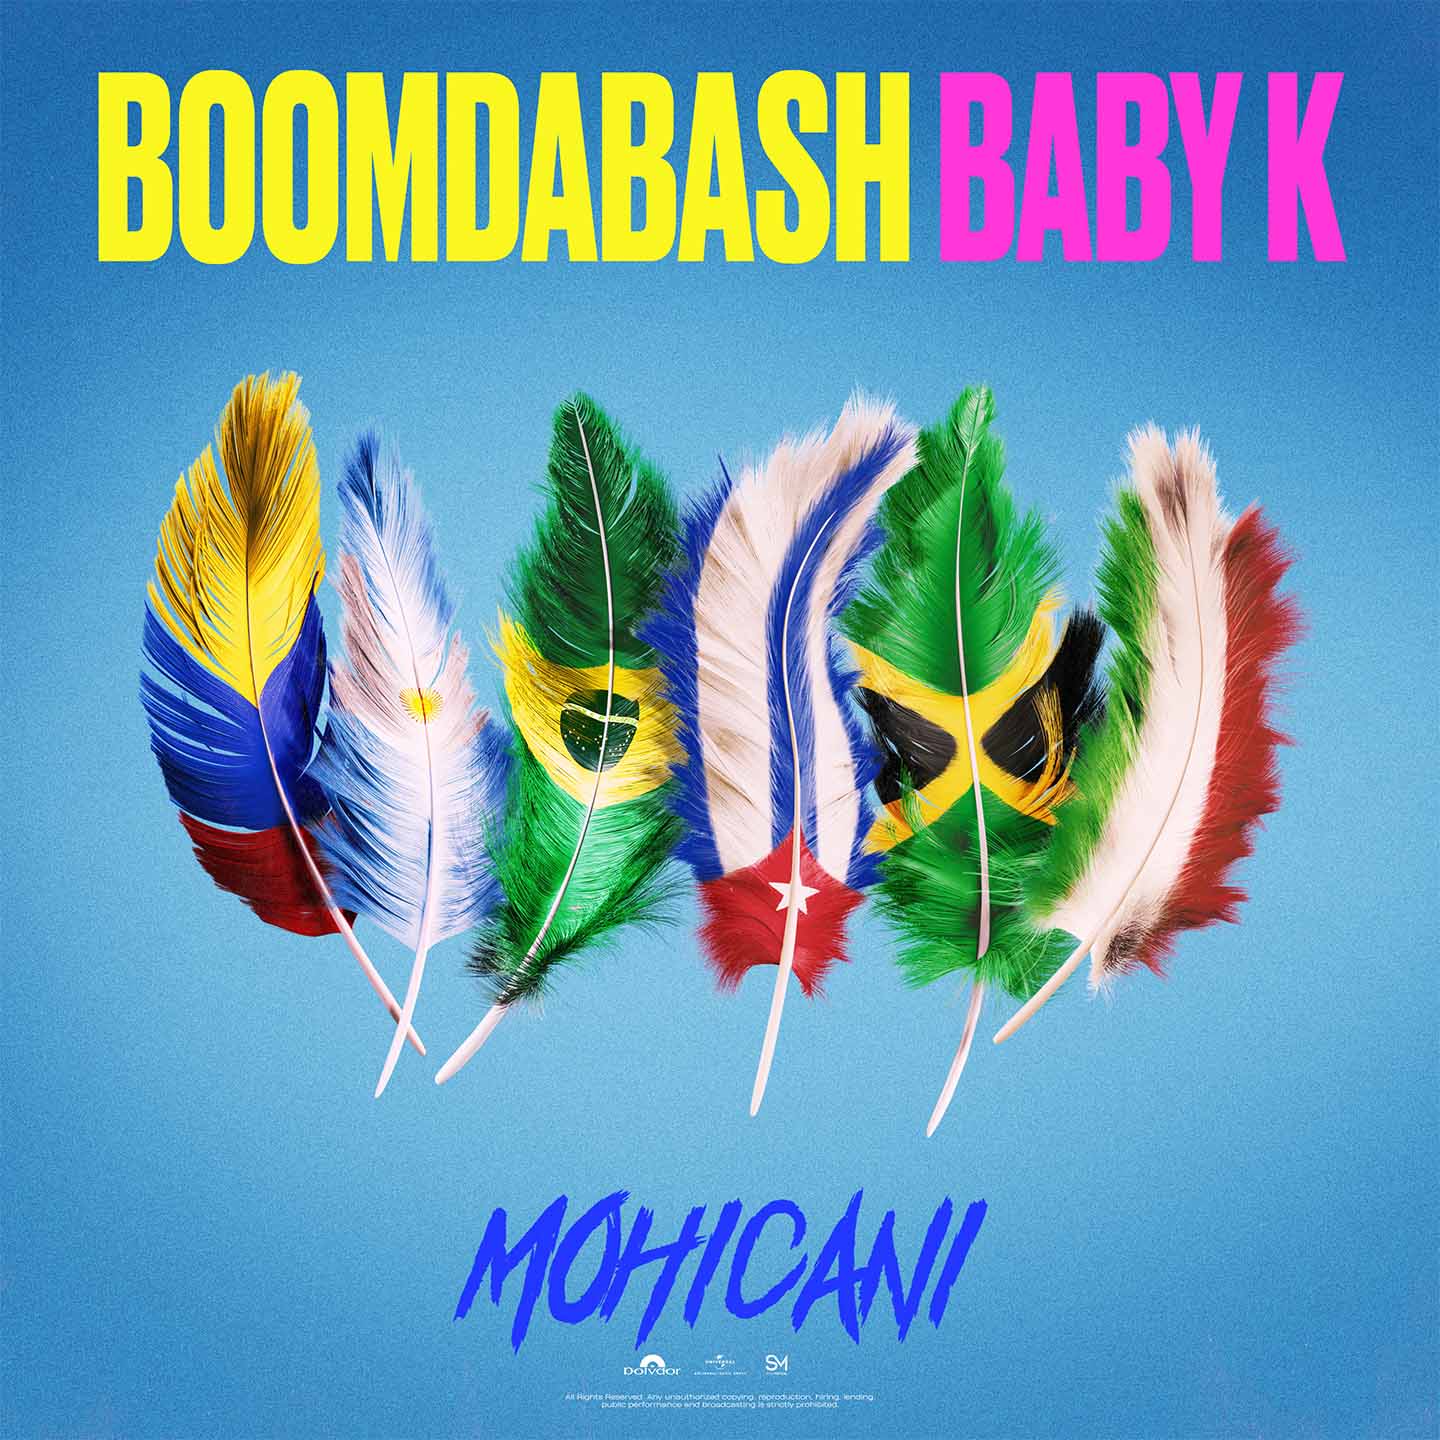 boomdabash-album-e-tour---immagini-BOOMDABASH,_BABY_K_-_MOHICANI_cover.jpg